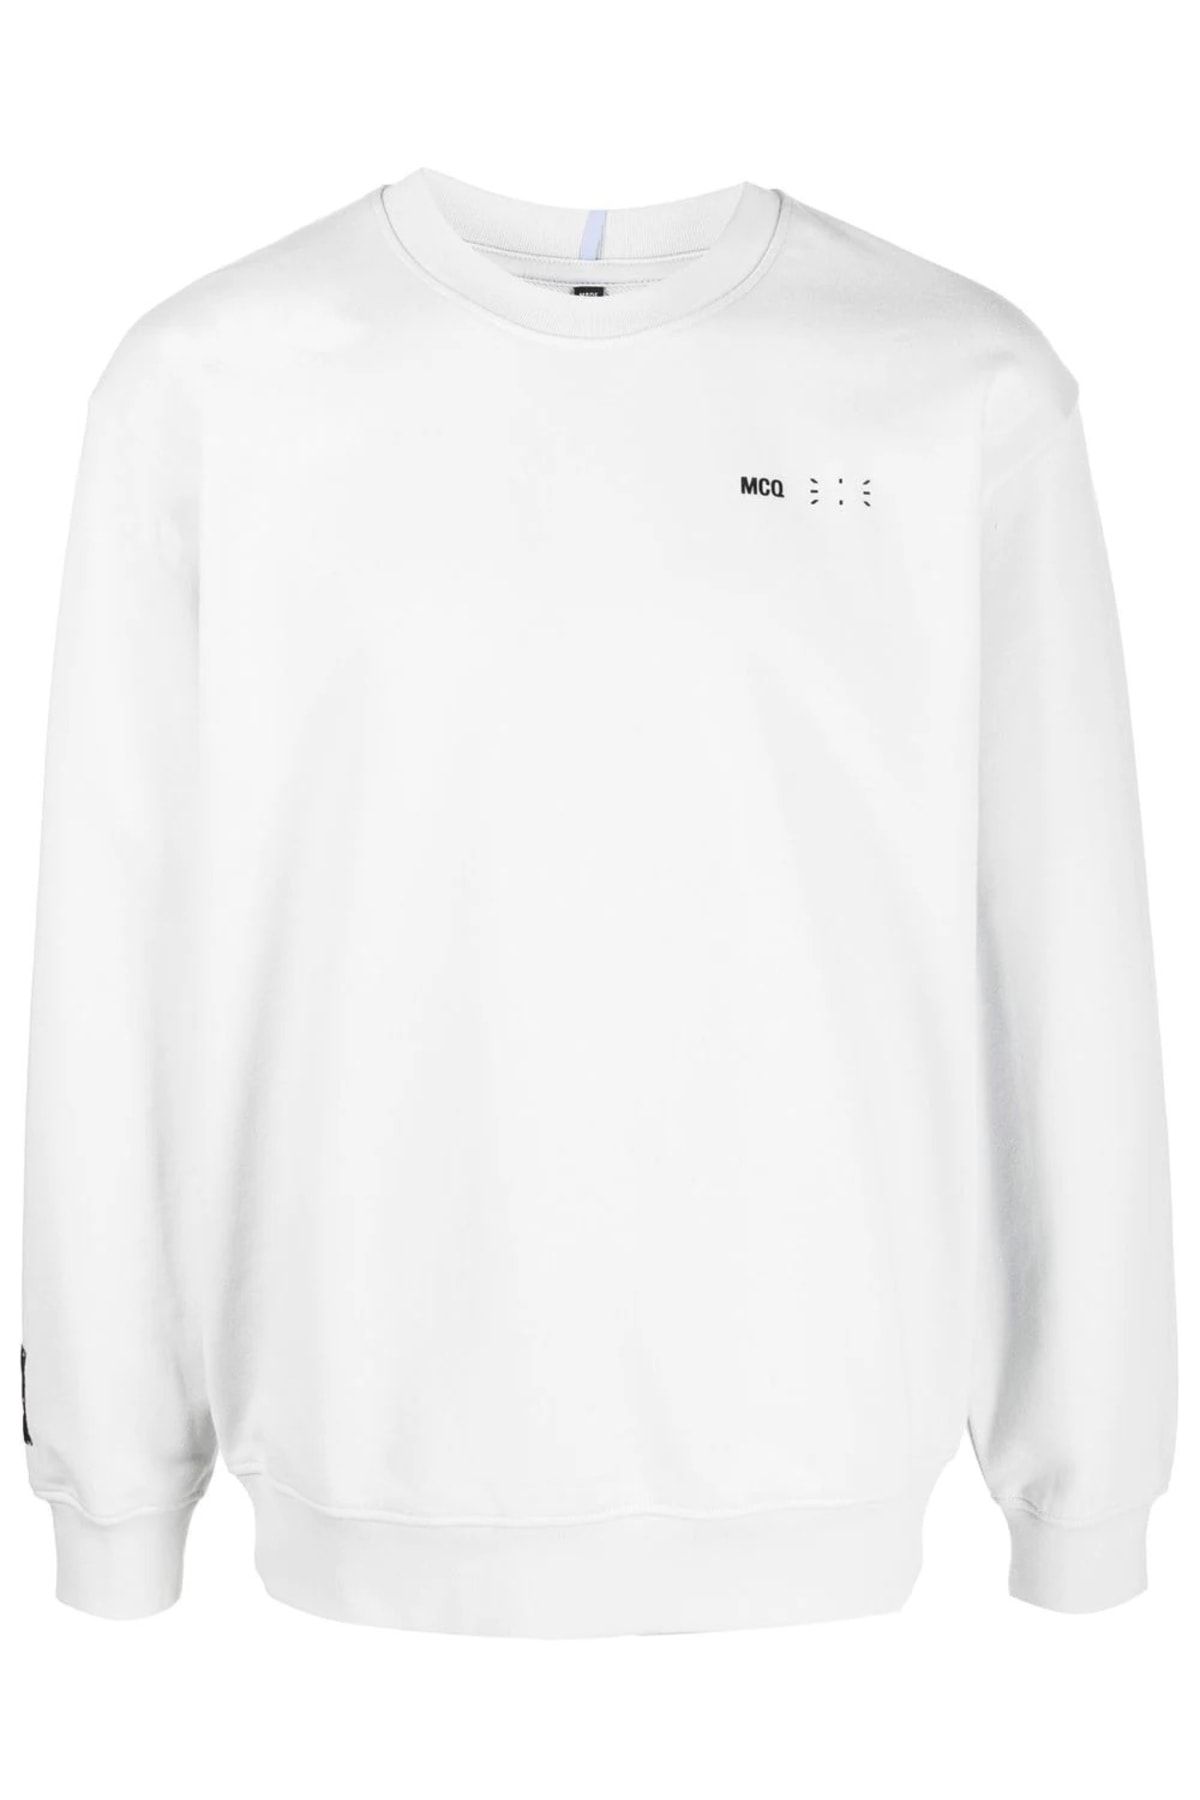 ALEXANDER MCQUEEN Chest And Back Mcq Logo Printed Beyaz Sweatshirt 22-23